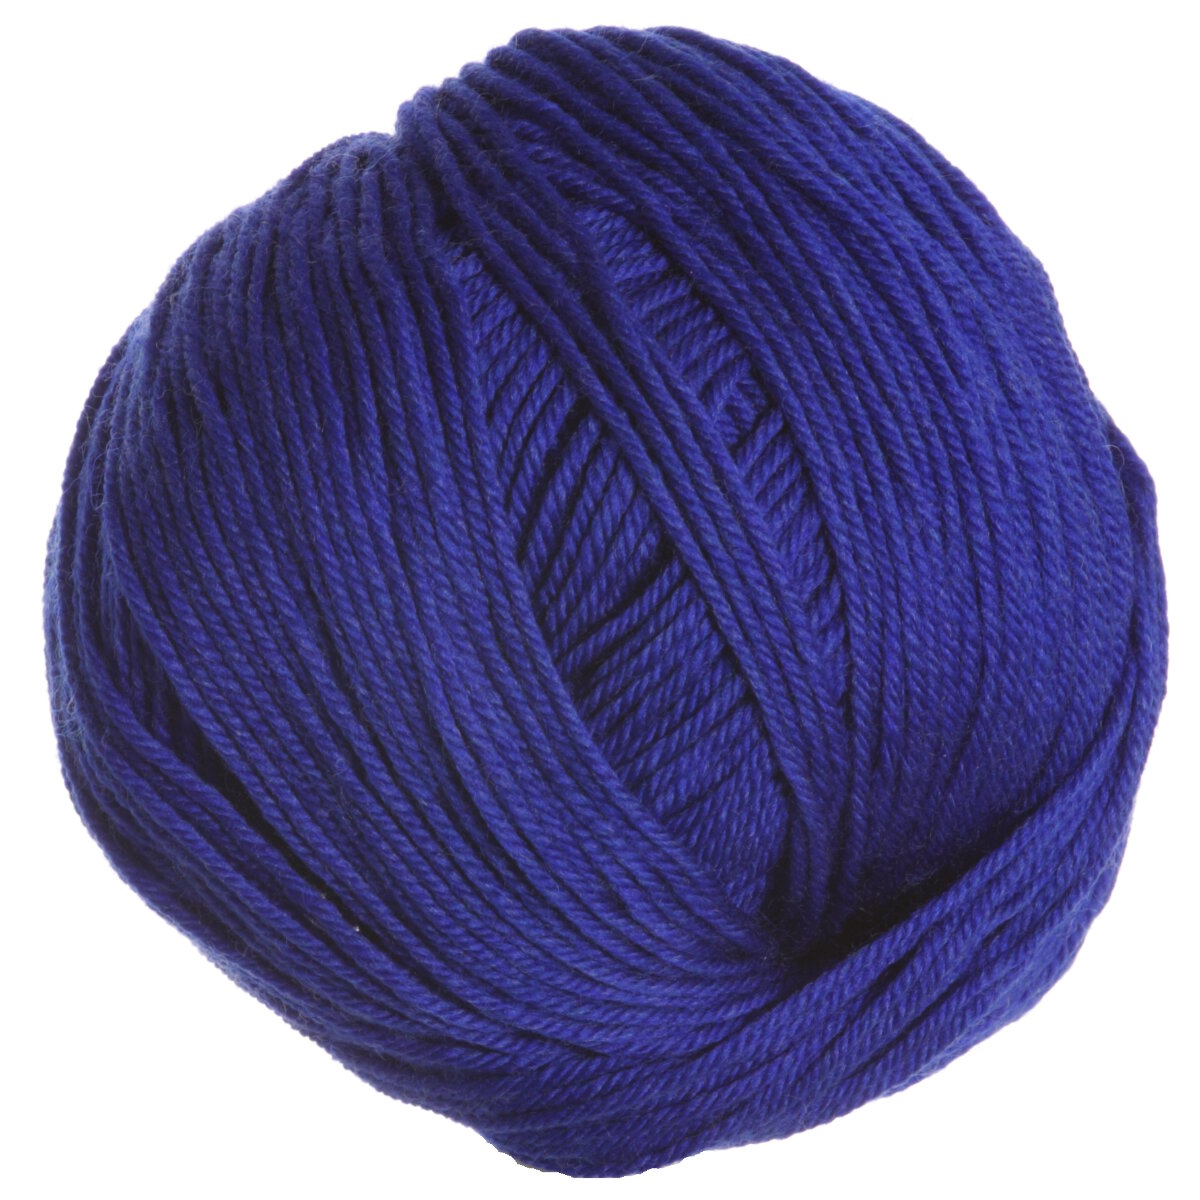 Cascade 220 Superwash Yarn - 1925 - Cobalt Heather at Jimmy Beans Wool